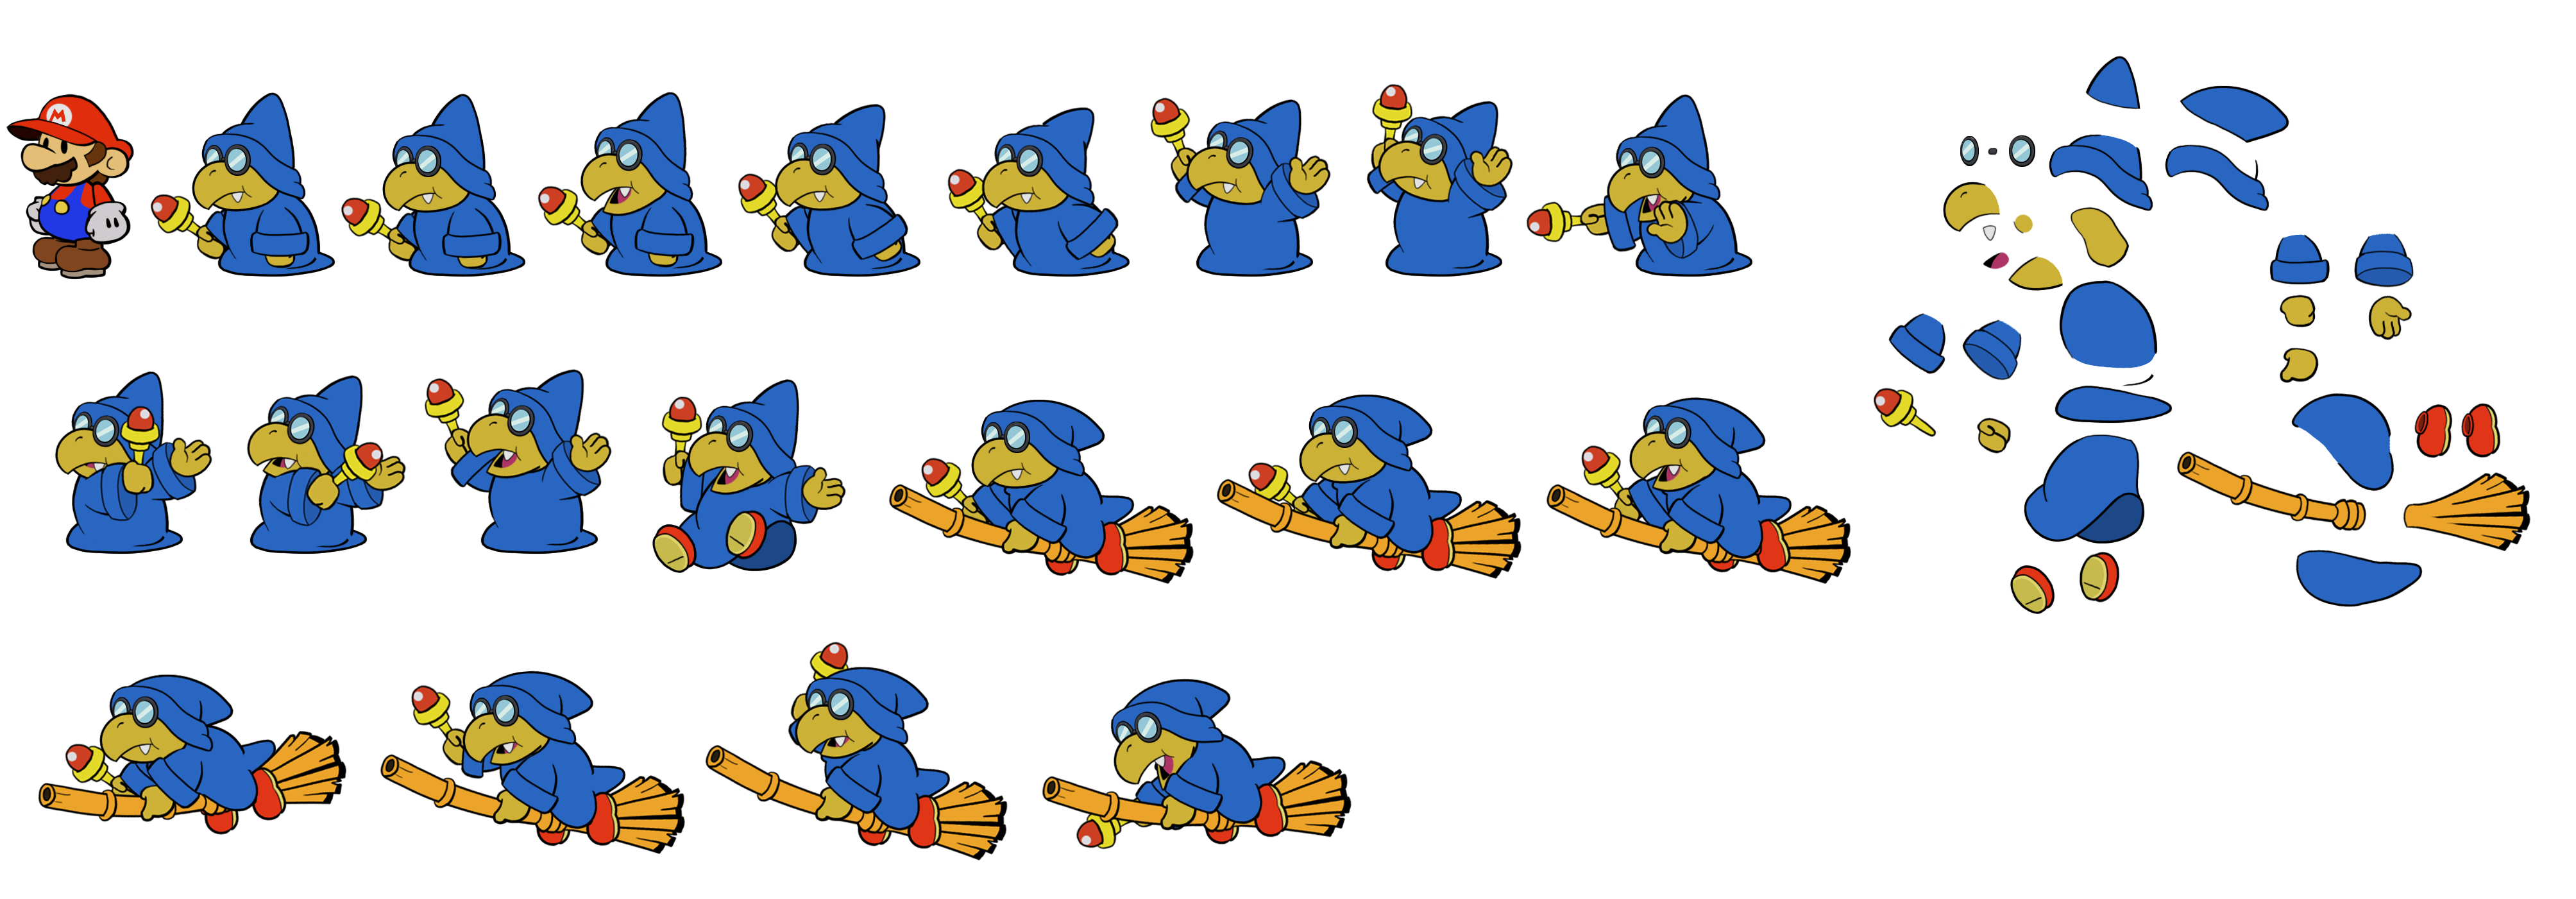 Mario Customs - Magikoopa (Blue, Paper Mario-Style)